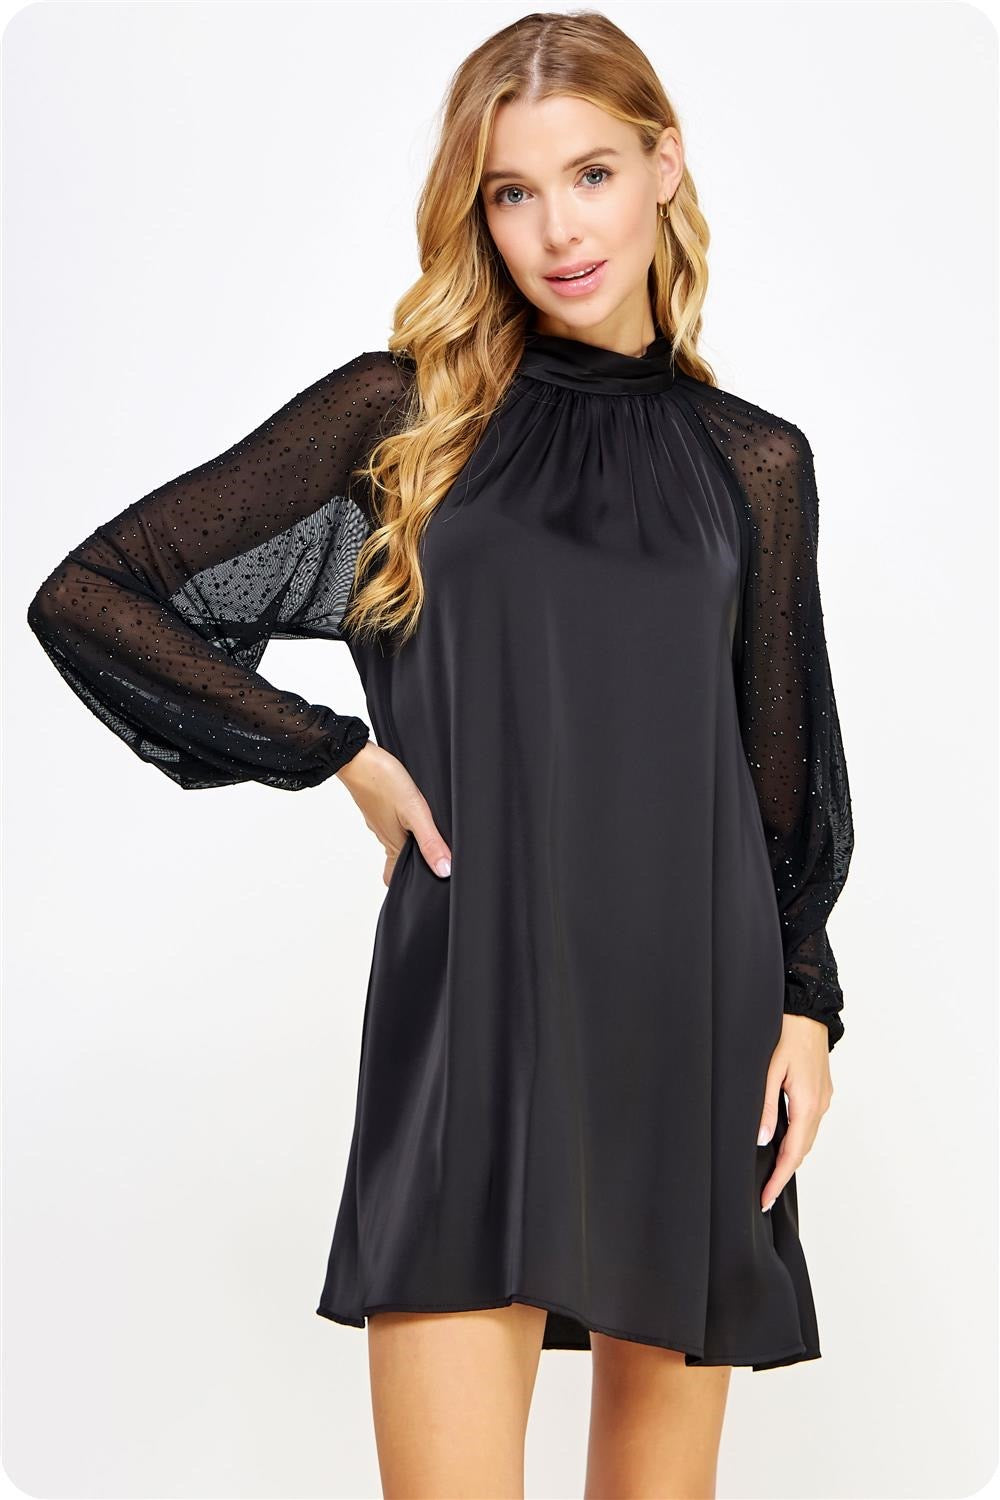 Long Sleeve Black Satin Dress